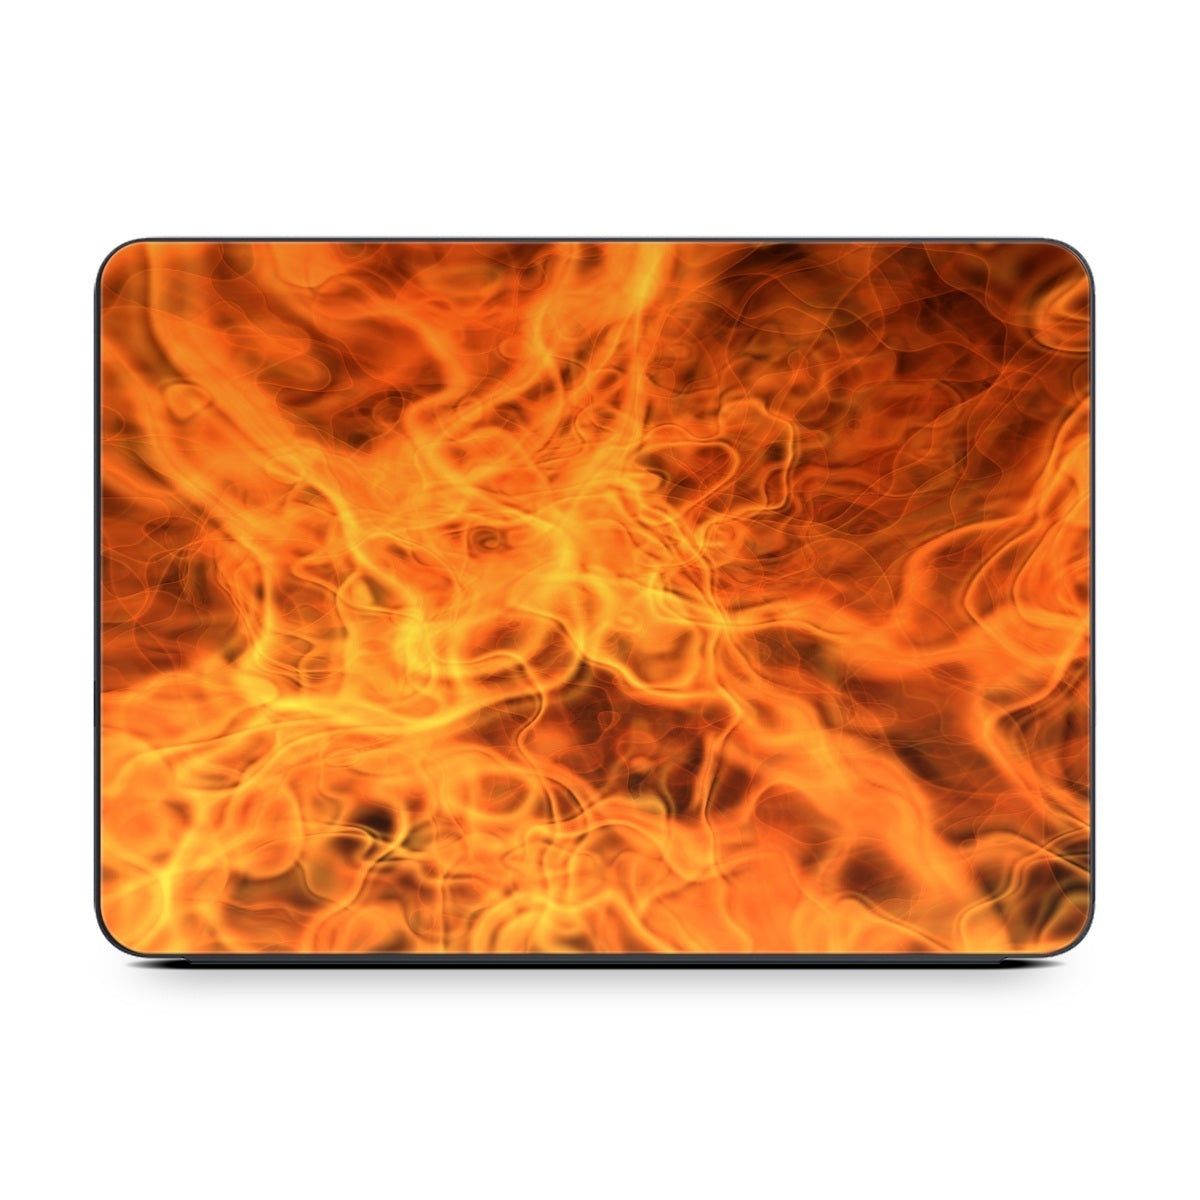 Combustion - Apple Smart Keyboard Folio Skin